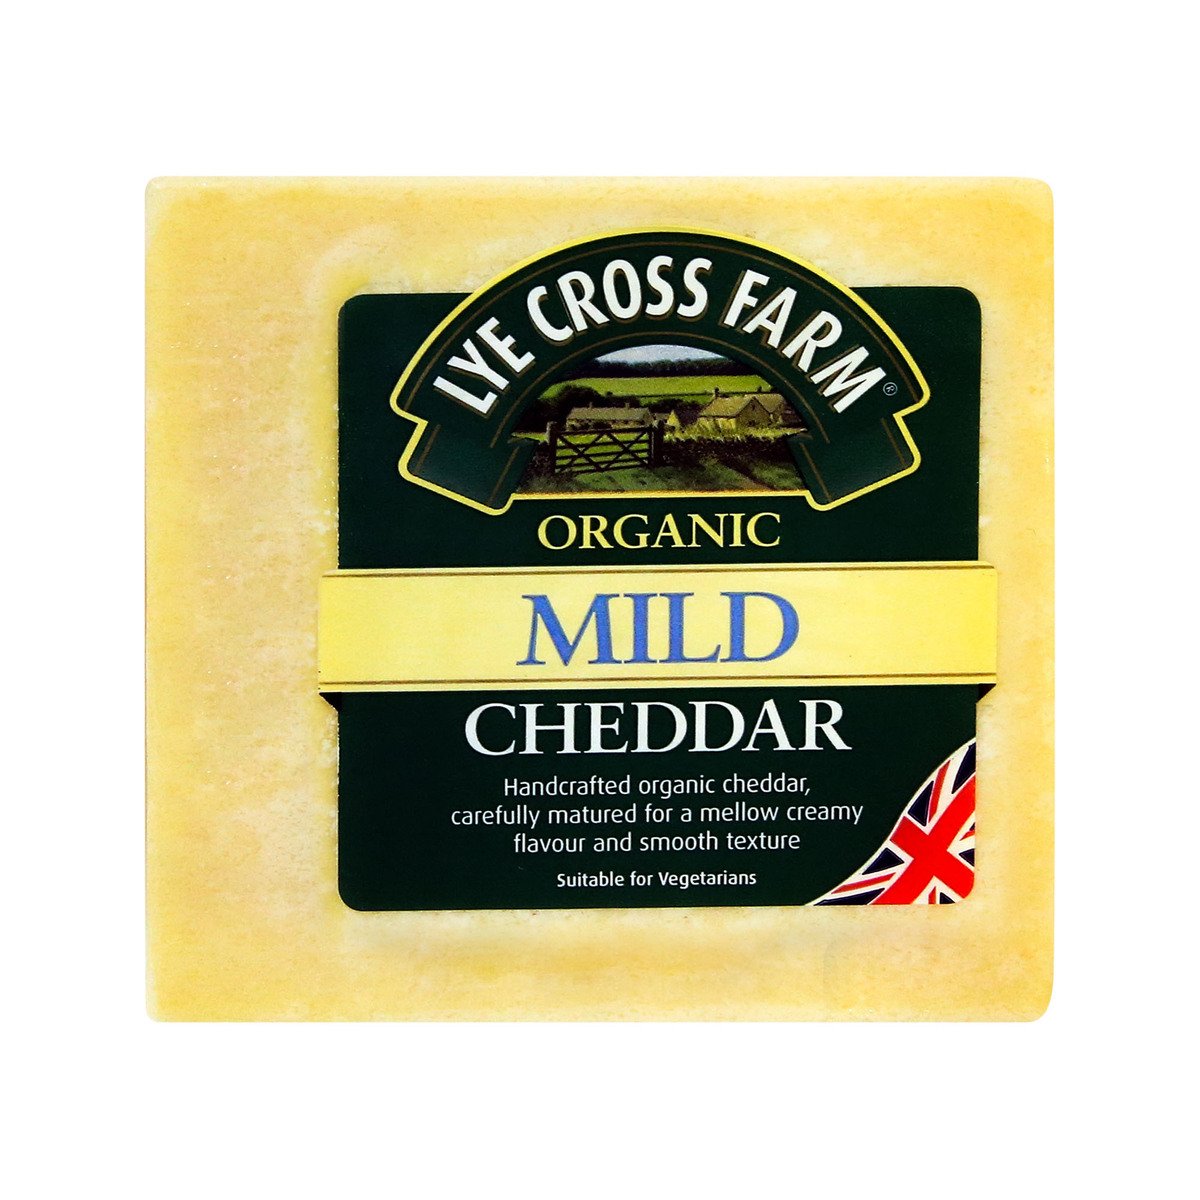 Lye Cross Farm Organic Mild Cheddar 200 g